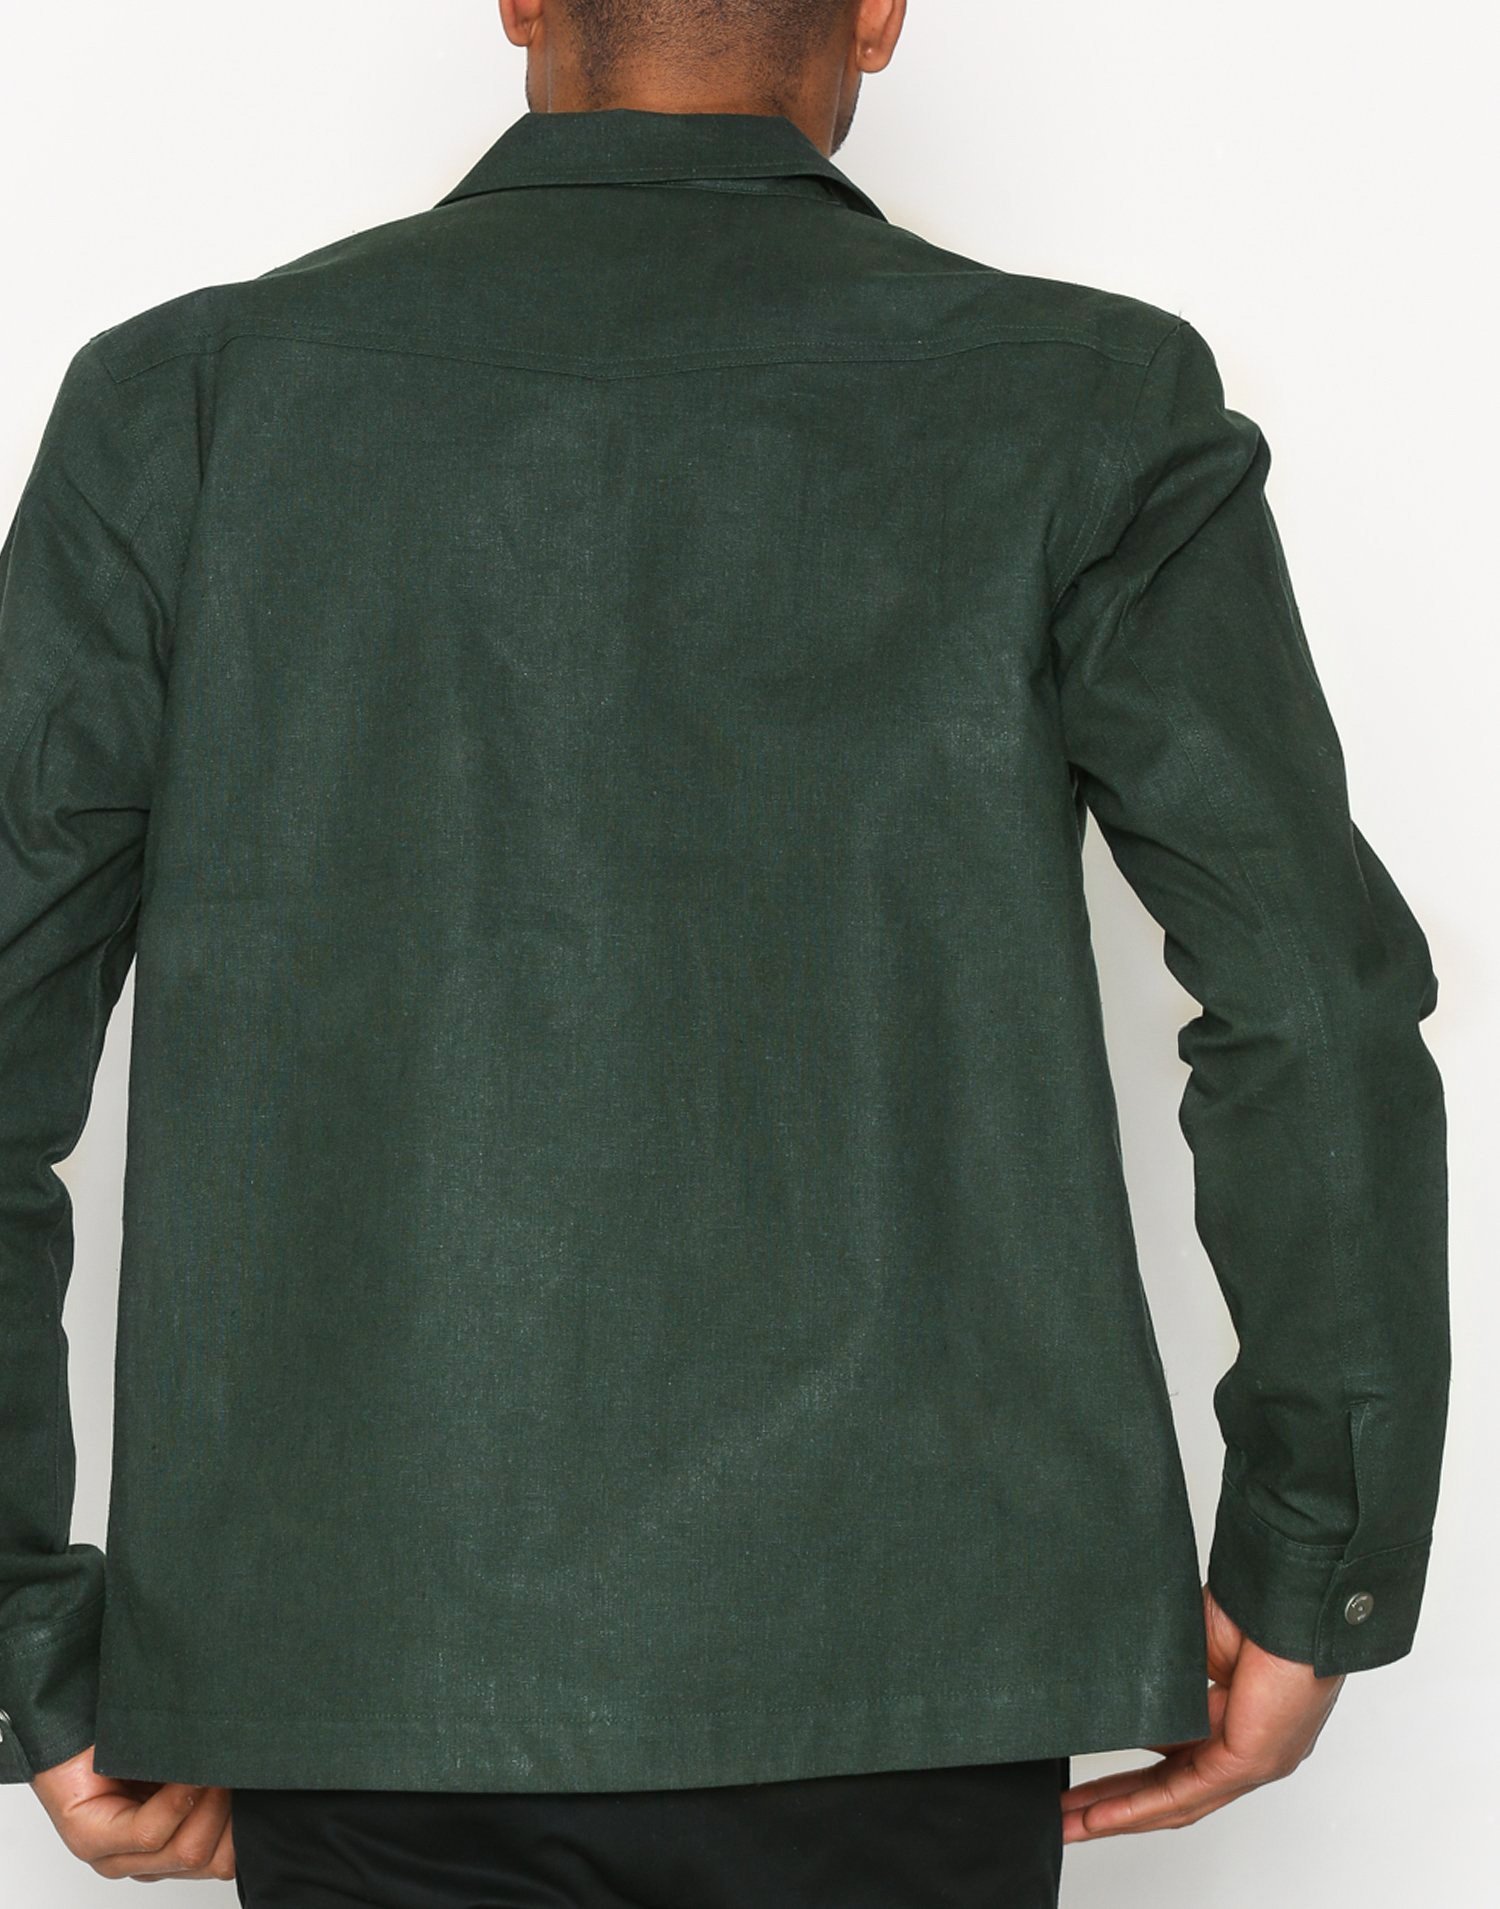 Ruddy Jacket - Elvine - Bottle Green - Jackets - Clothing - Men ...